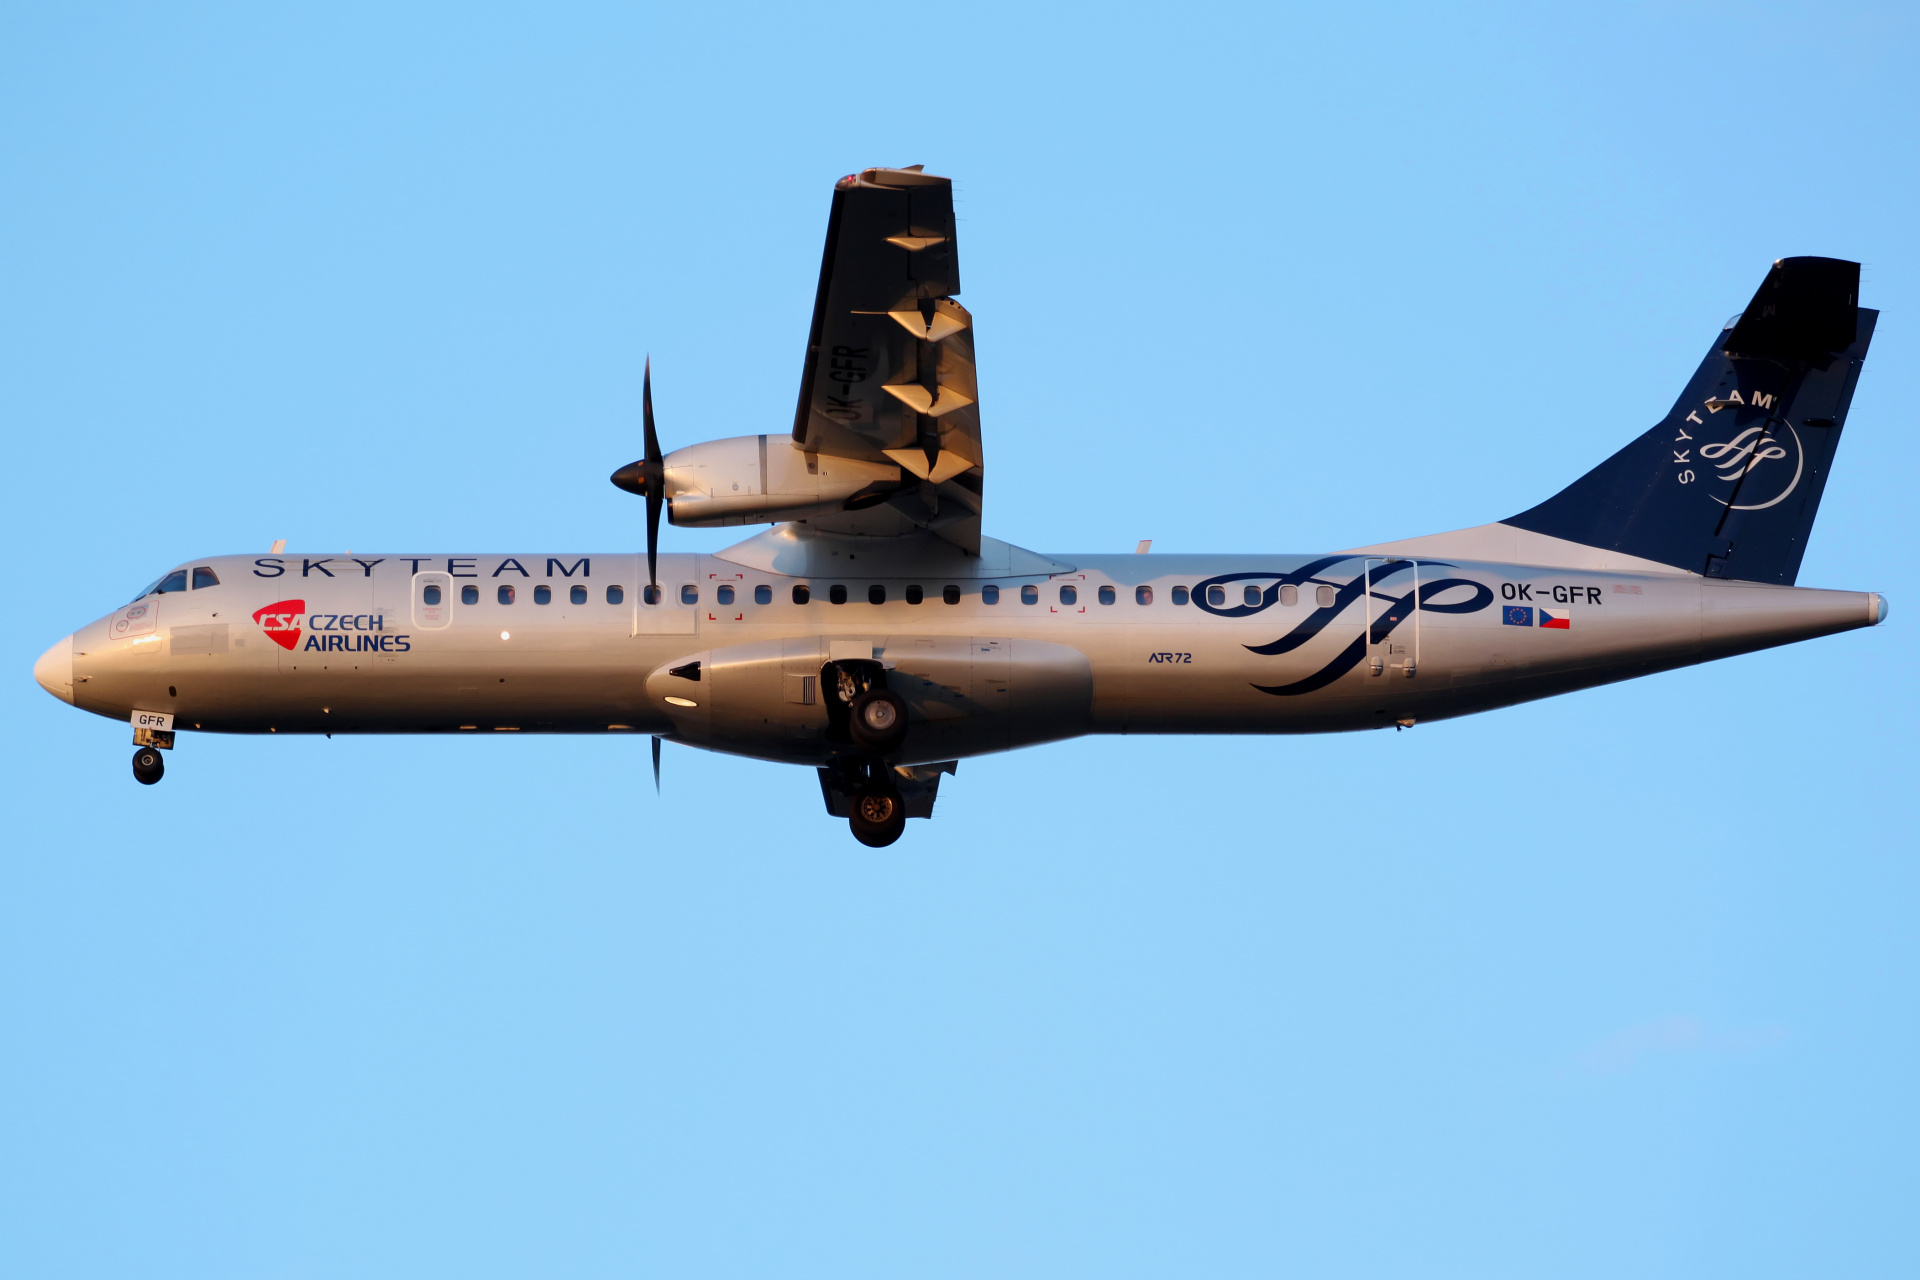 OK-GFR (SkyTeam livery) (Aircraft » EPWA Spotting » ATR 72 » CSA Czech Airlines)